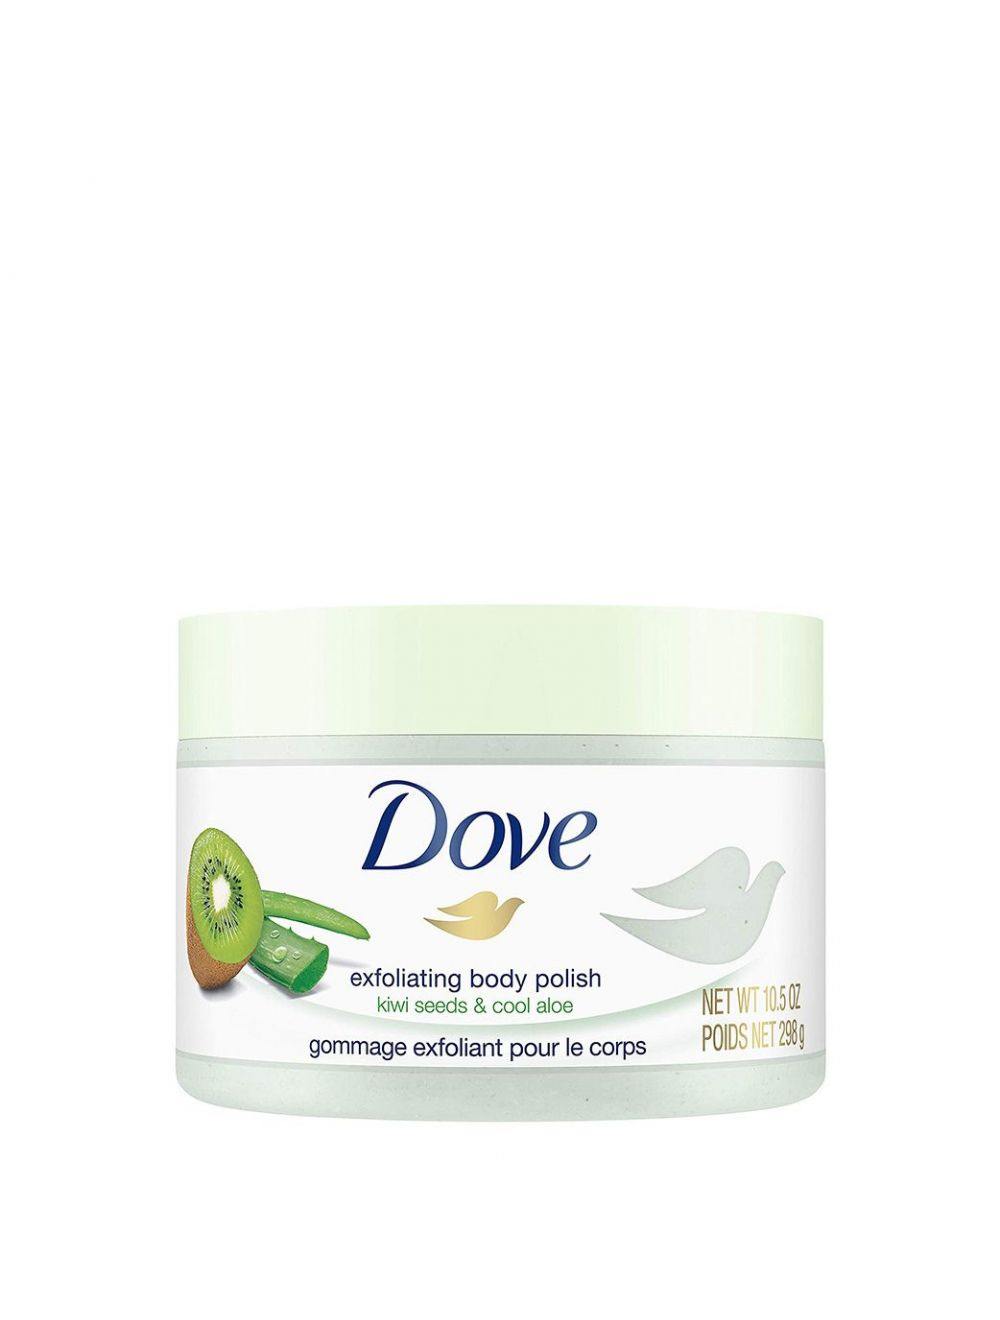 Dove Exfoliating Body Polish - Kiwi Seeds & Cool Aloe (298gm) - Niram